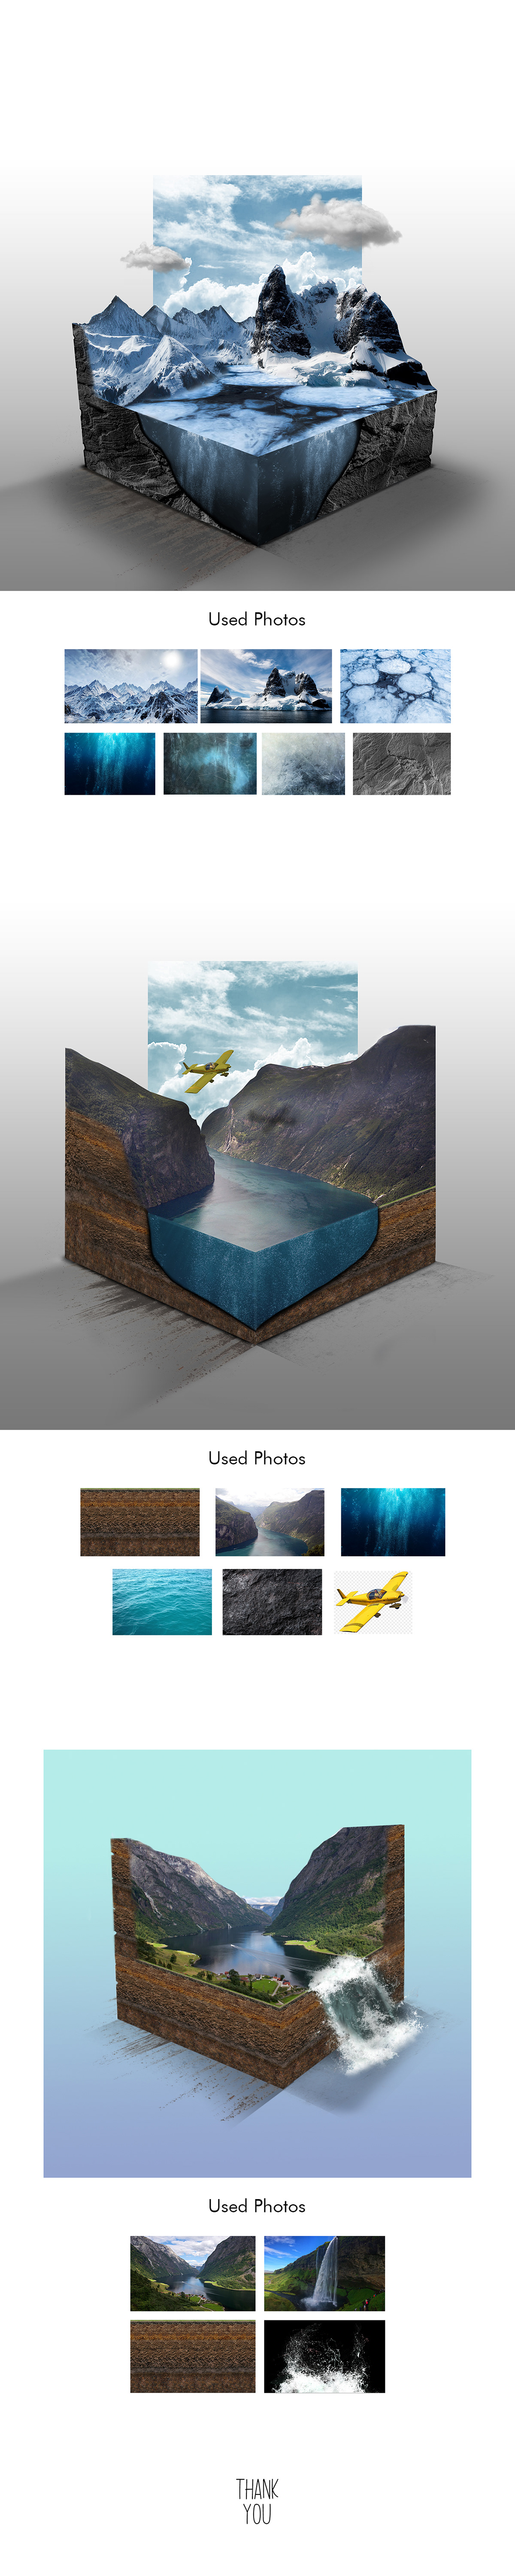 Digital Art  Landscape manipulation microworld   photoshop